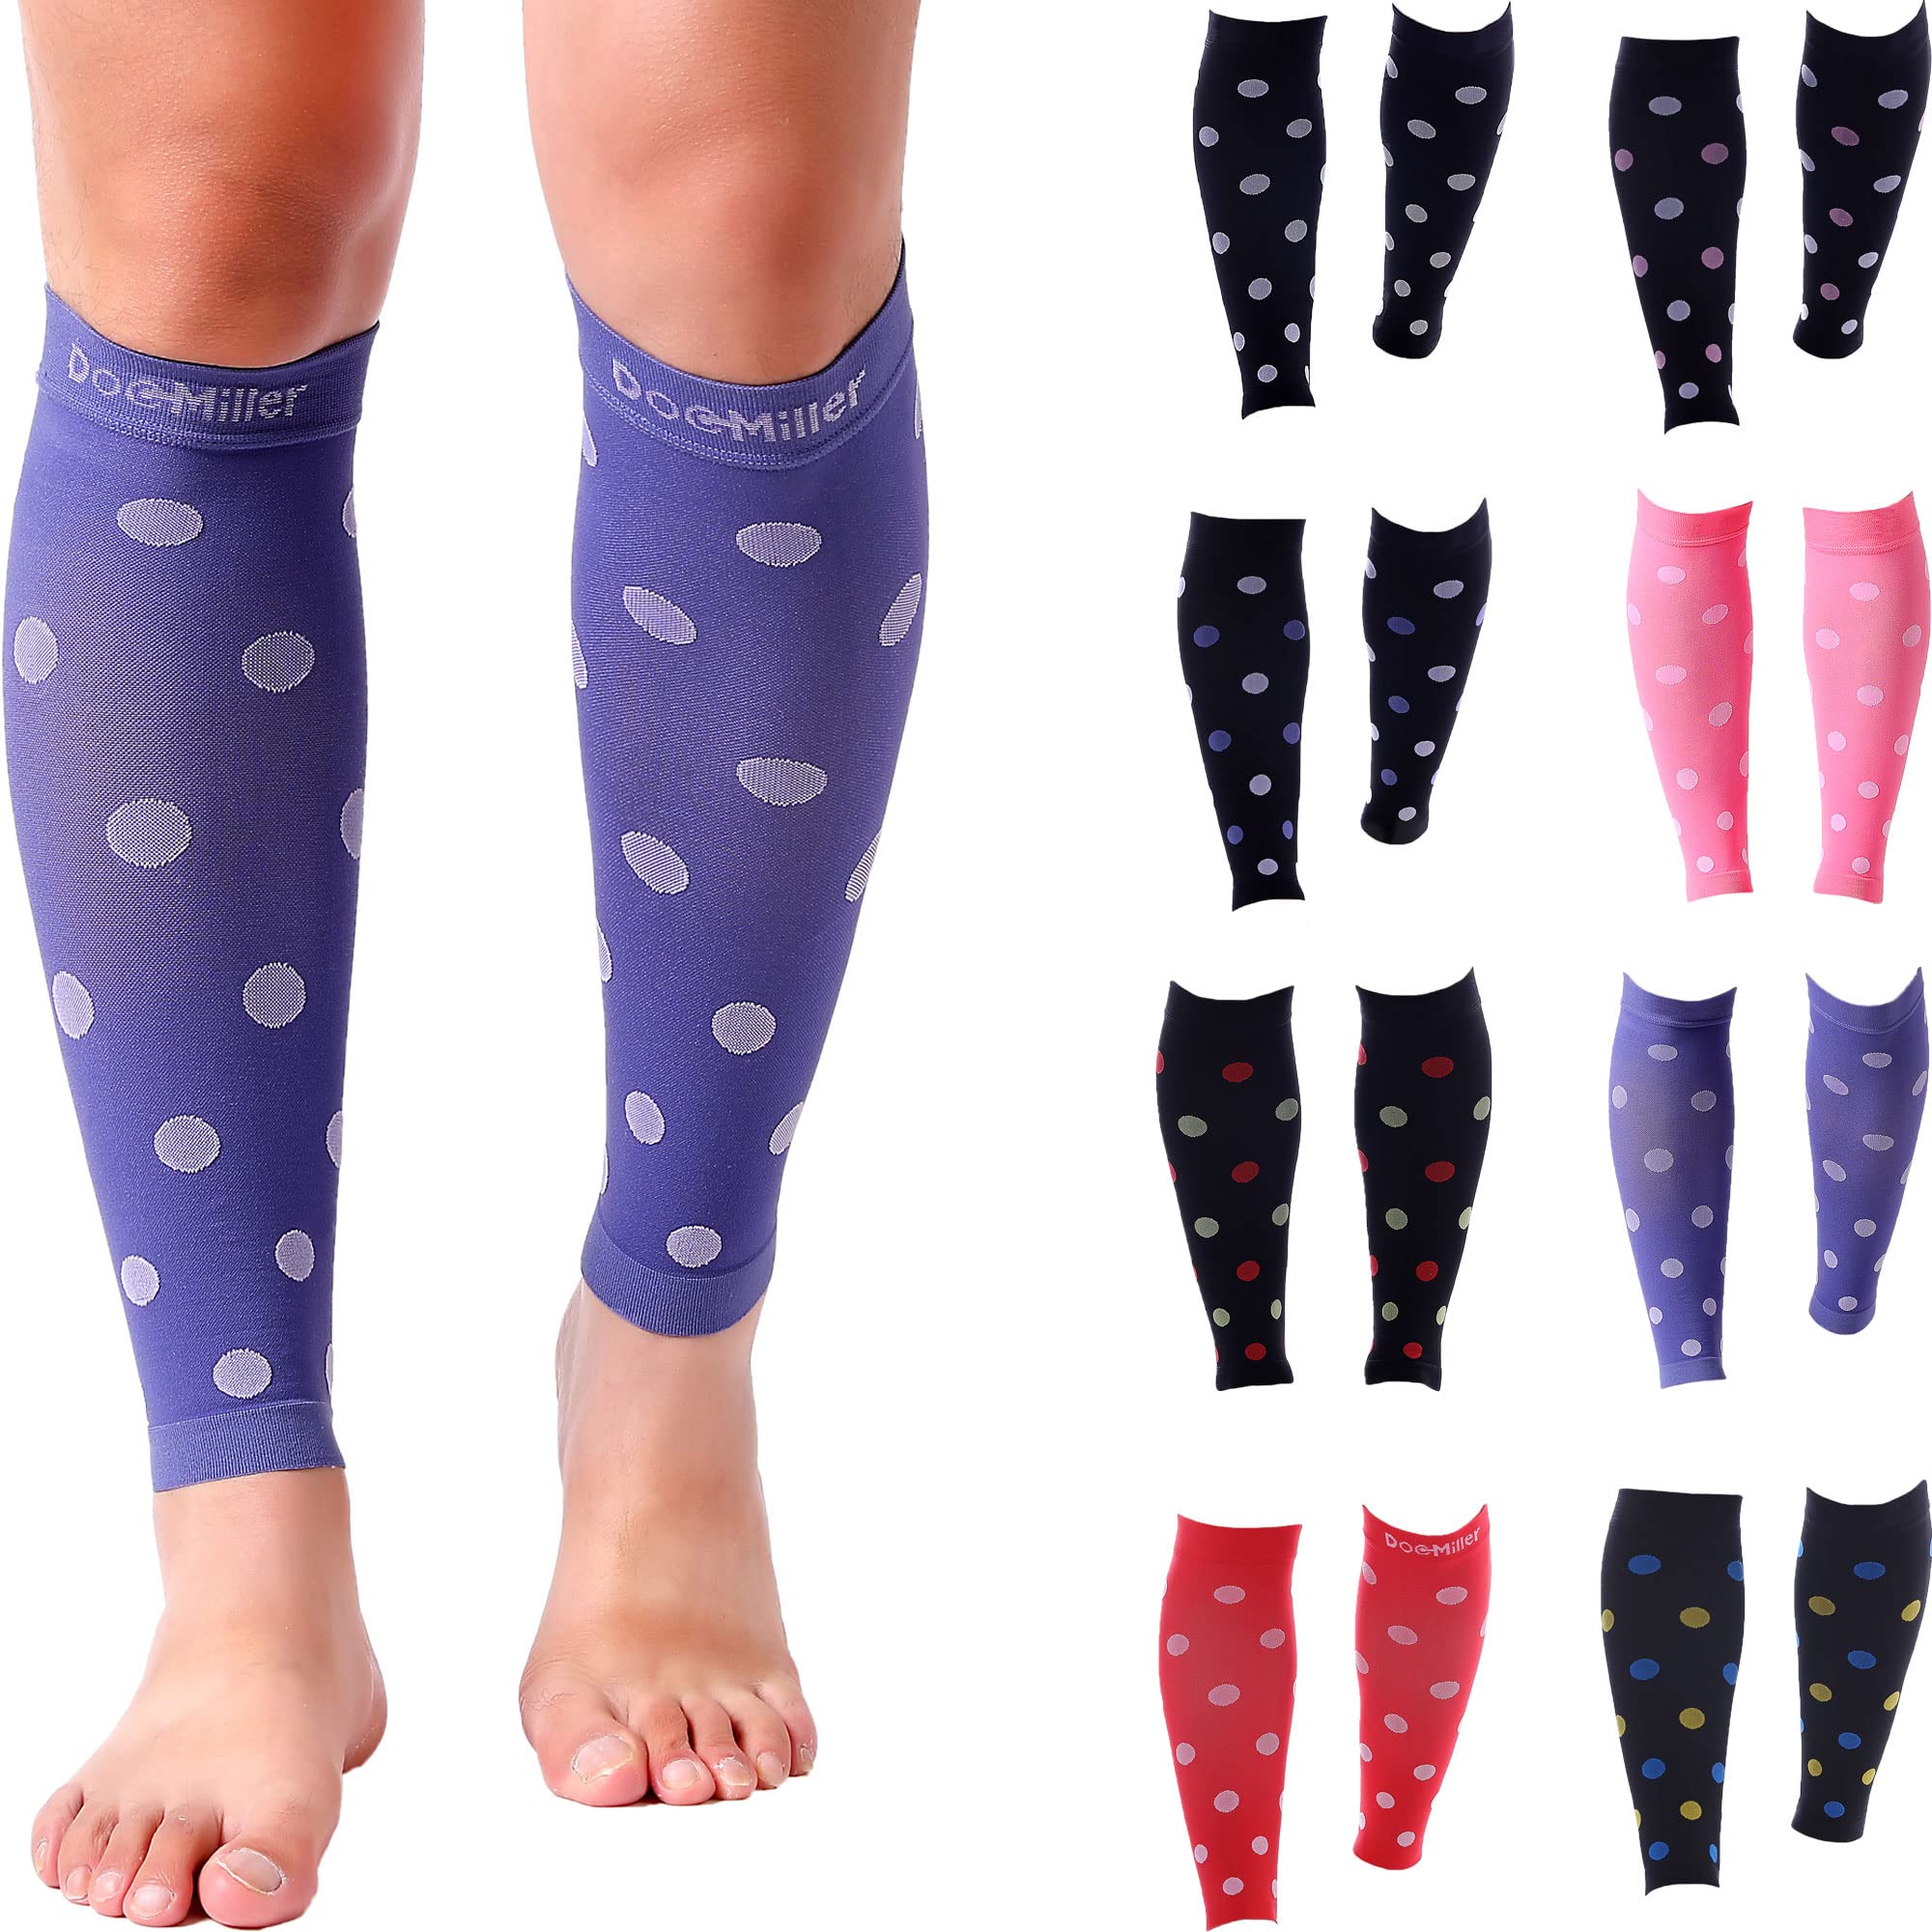 1Pair Calf Compression Sleeves Running Leg Compression Sleeve 20-30mmHg Compression  Socks for Shin Splint For Men Women